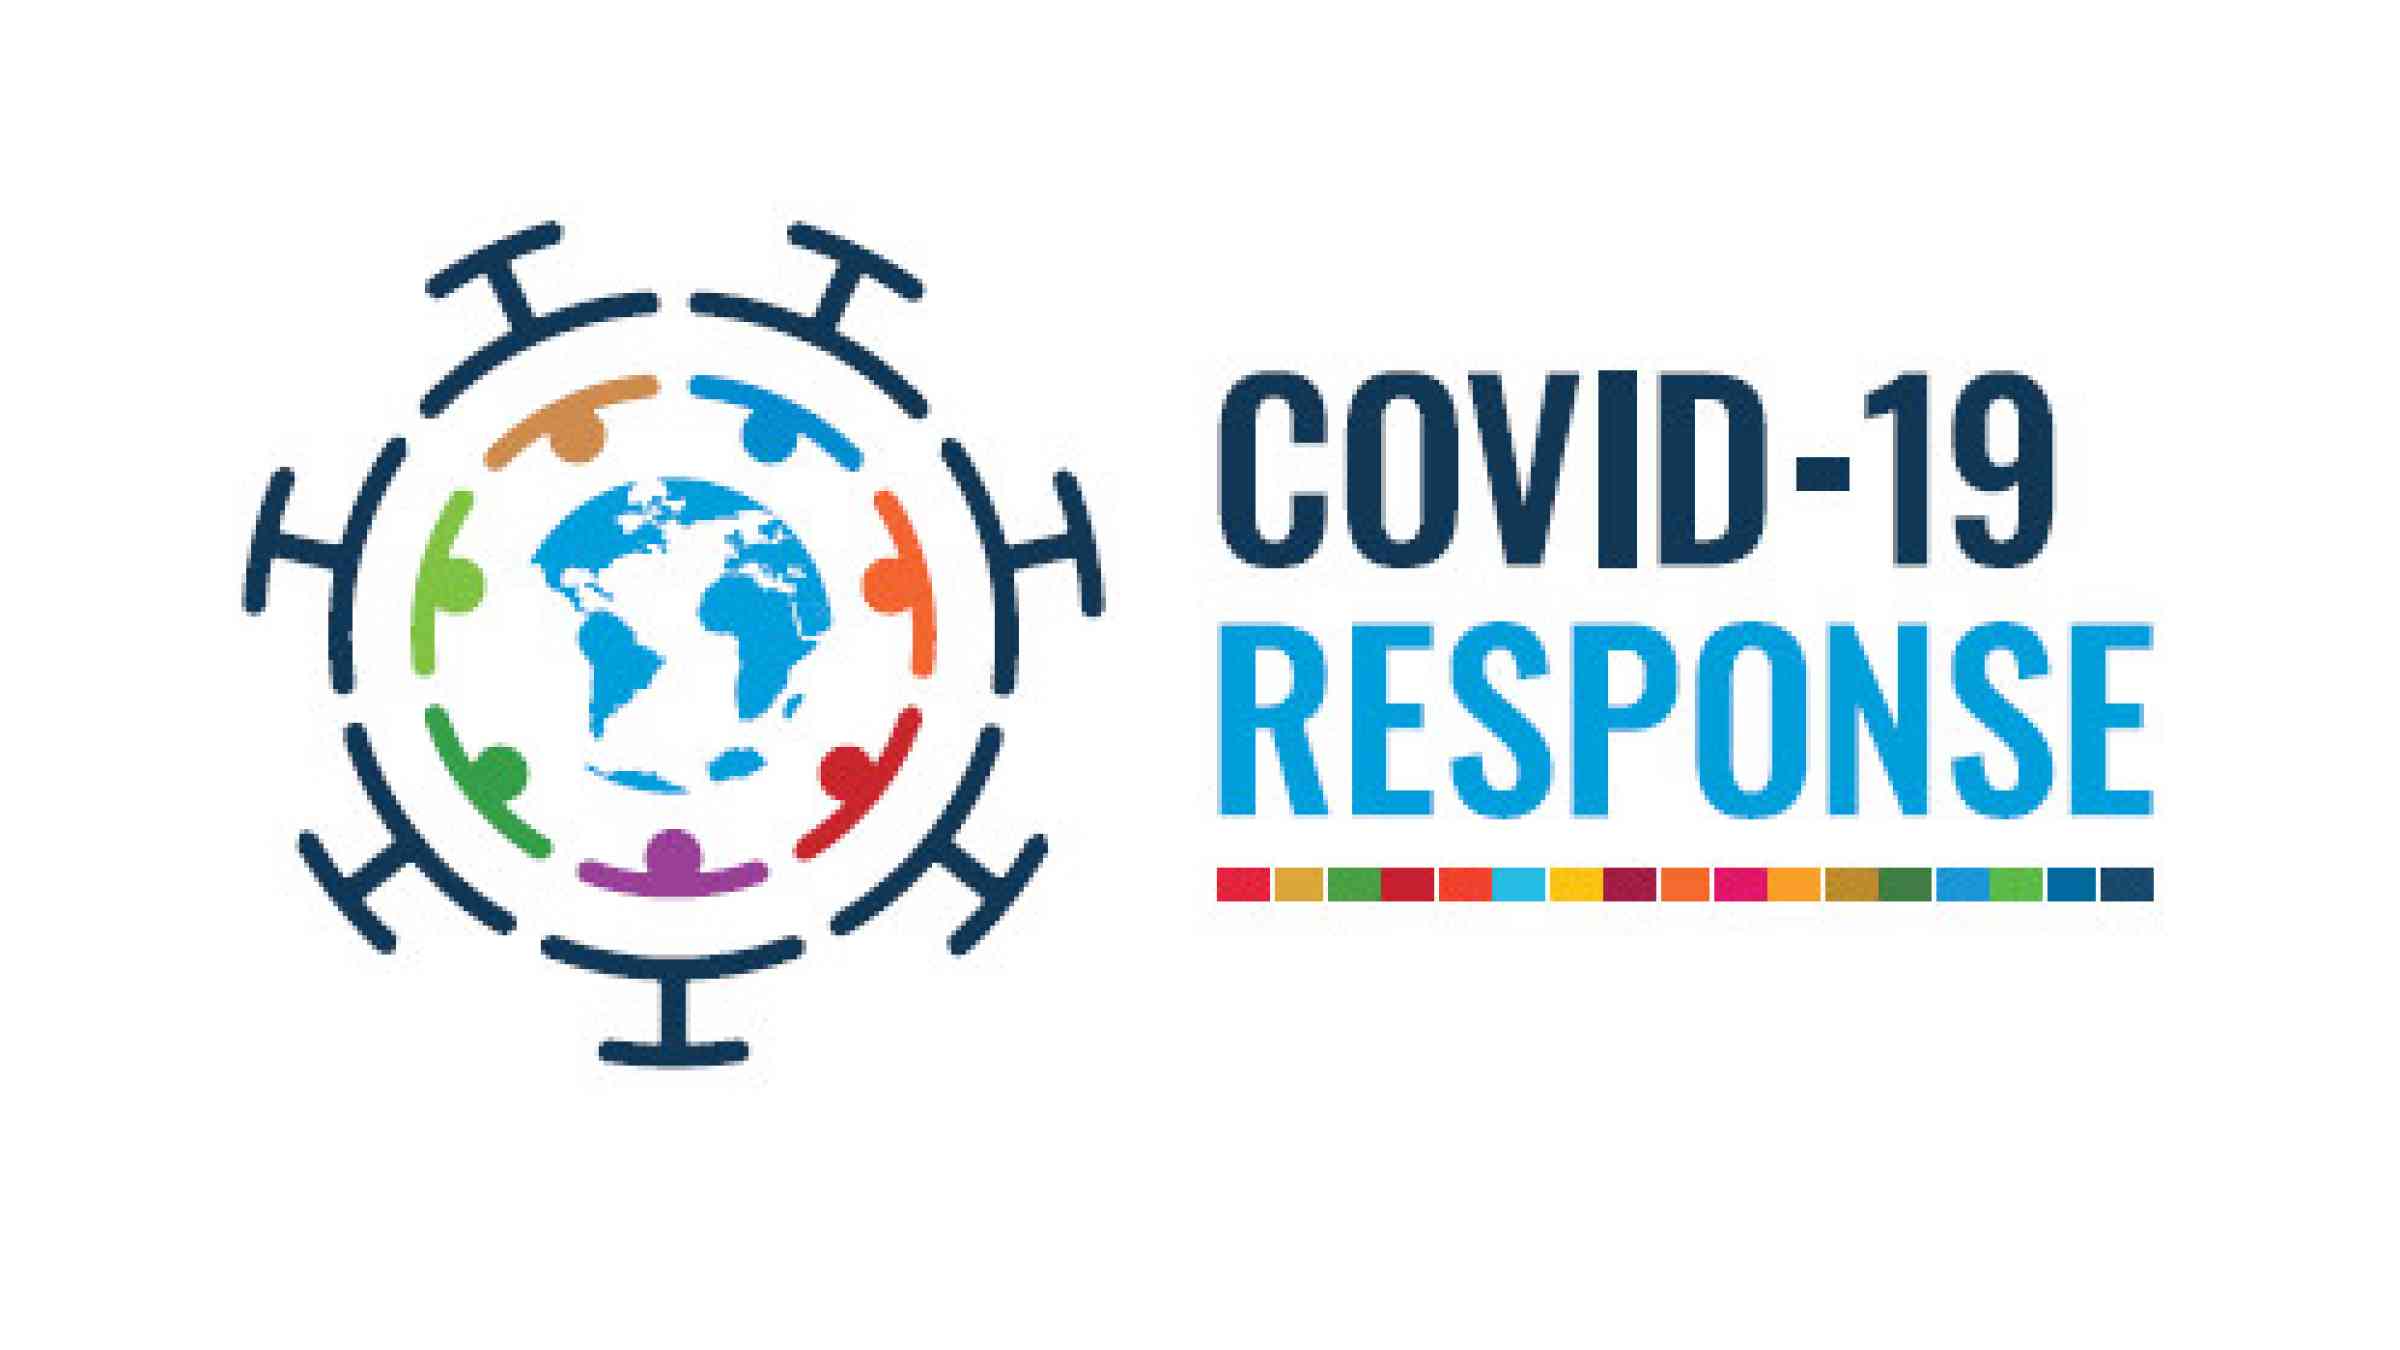 The UN Covid-19 response logo